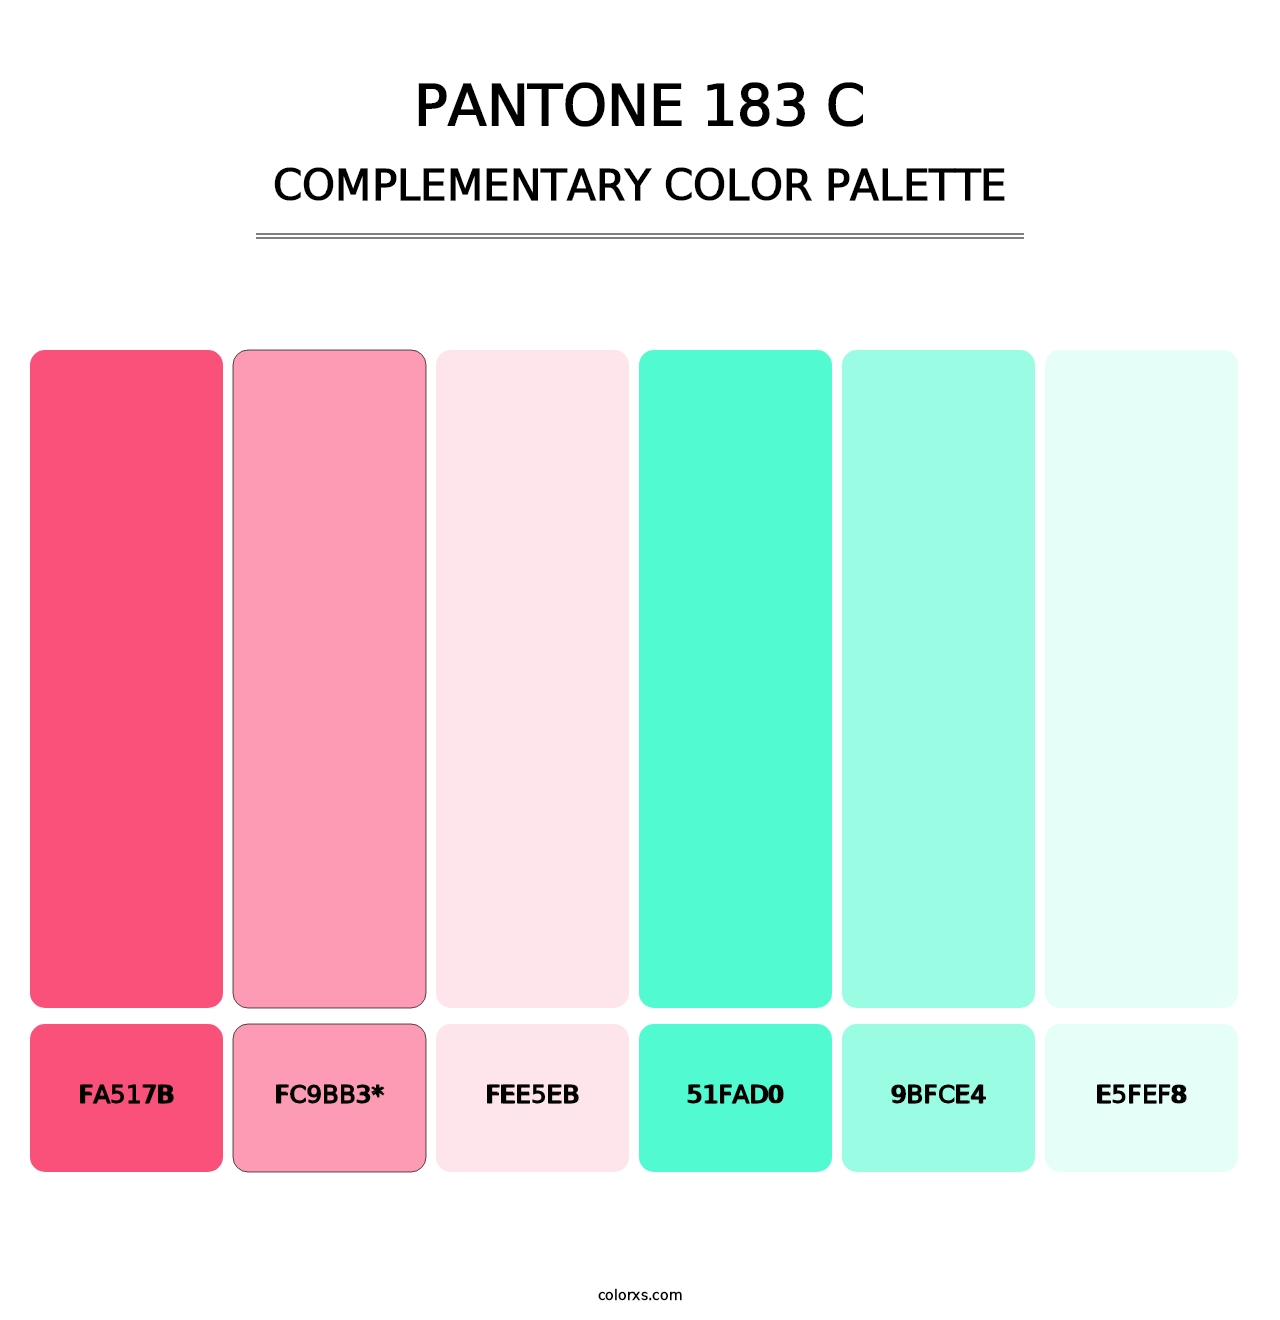 PANTONE 183 C - Complementary Color Palette